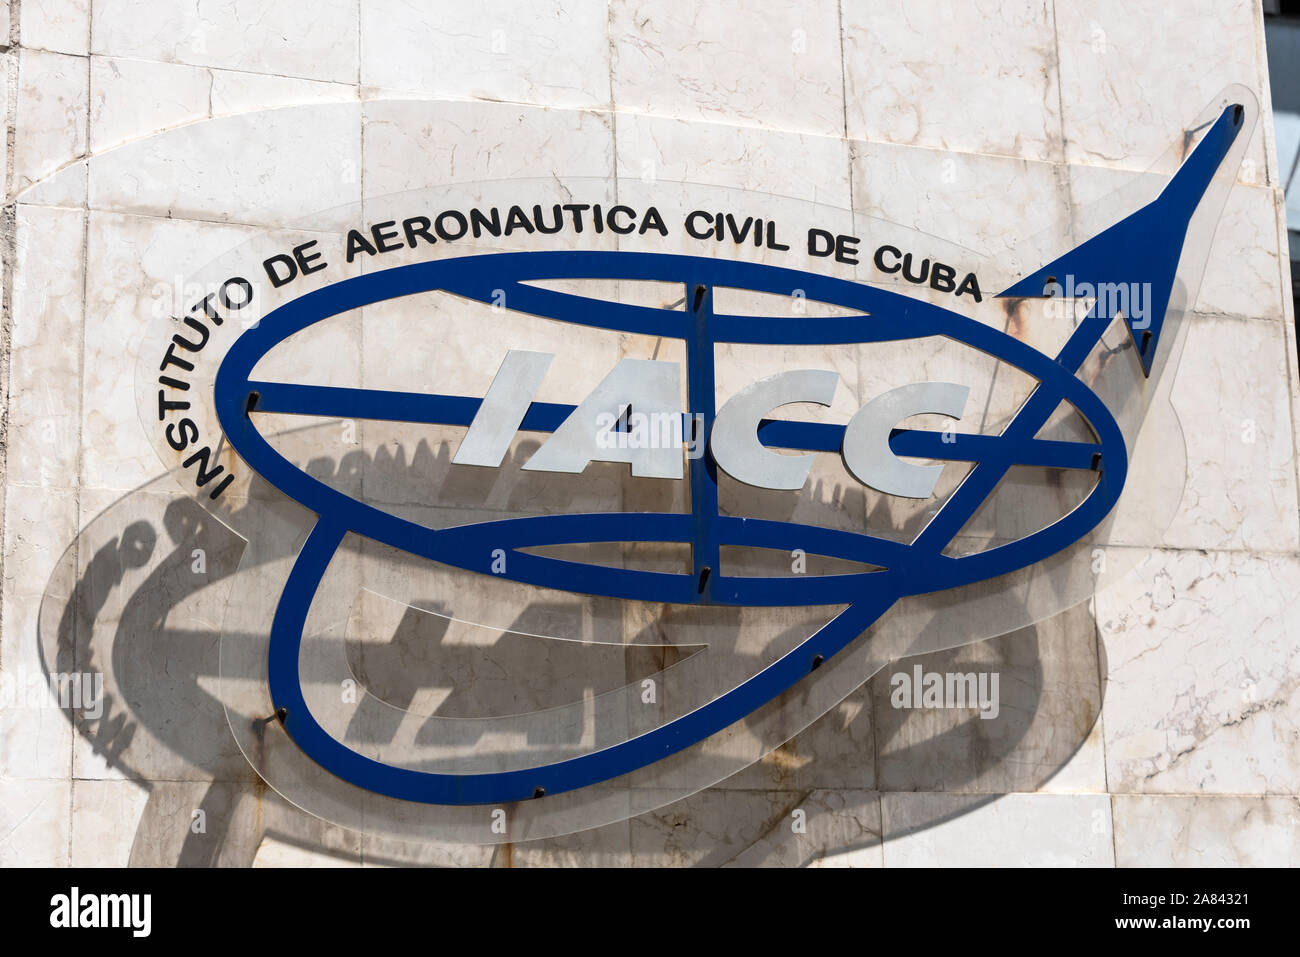 Instituto de Aeronautica Civil de Cuba (Deutsche-indische der zivilen Luftfahrt von Kuba) in der Avenida 23, Vedado, Havanna in Kuba Stockfoto